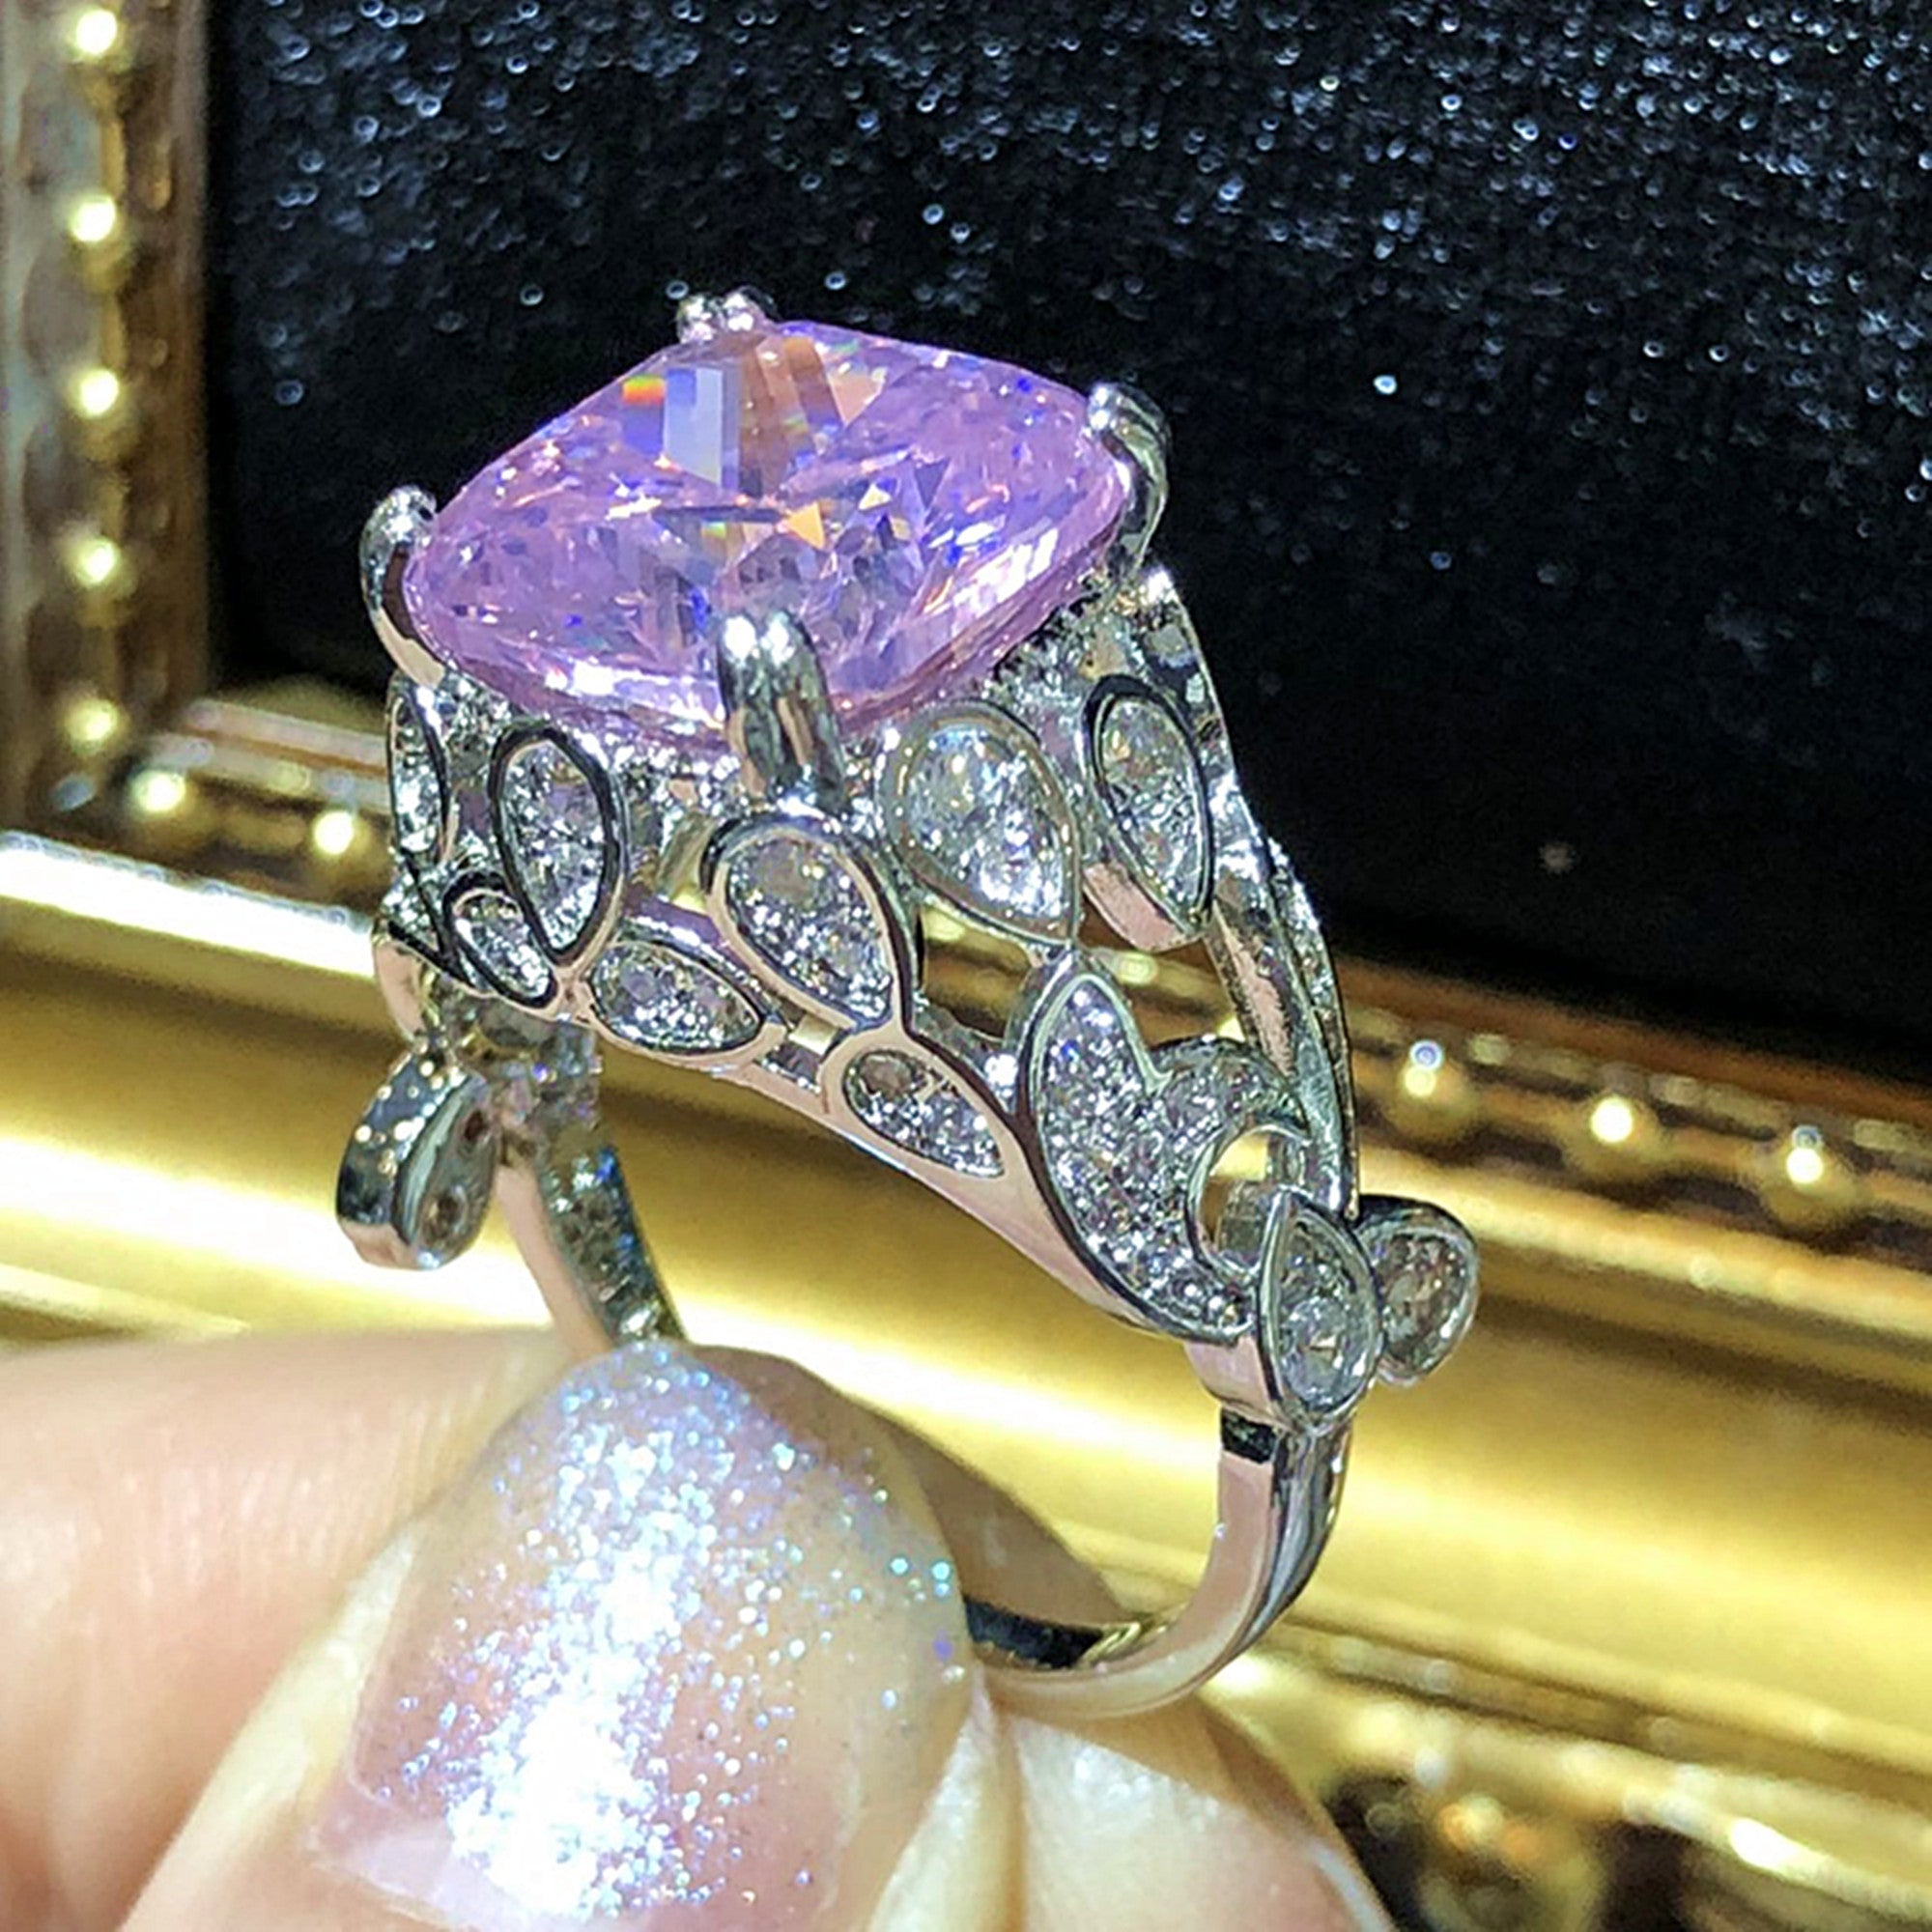 The Pave Pink Diamond Ring